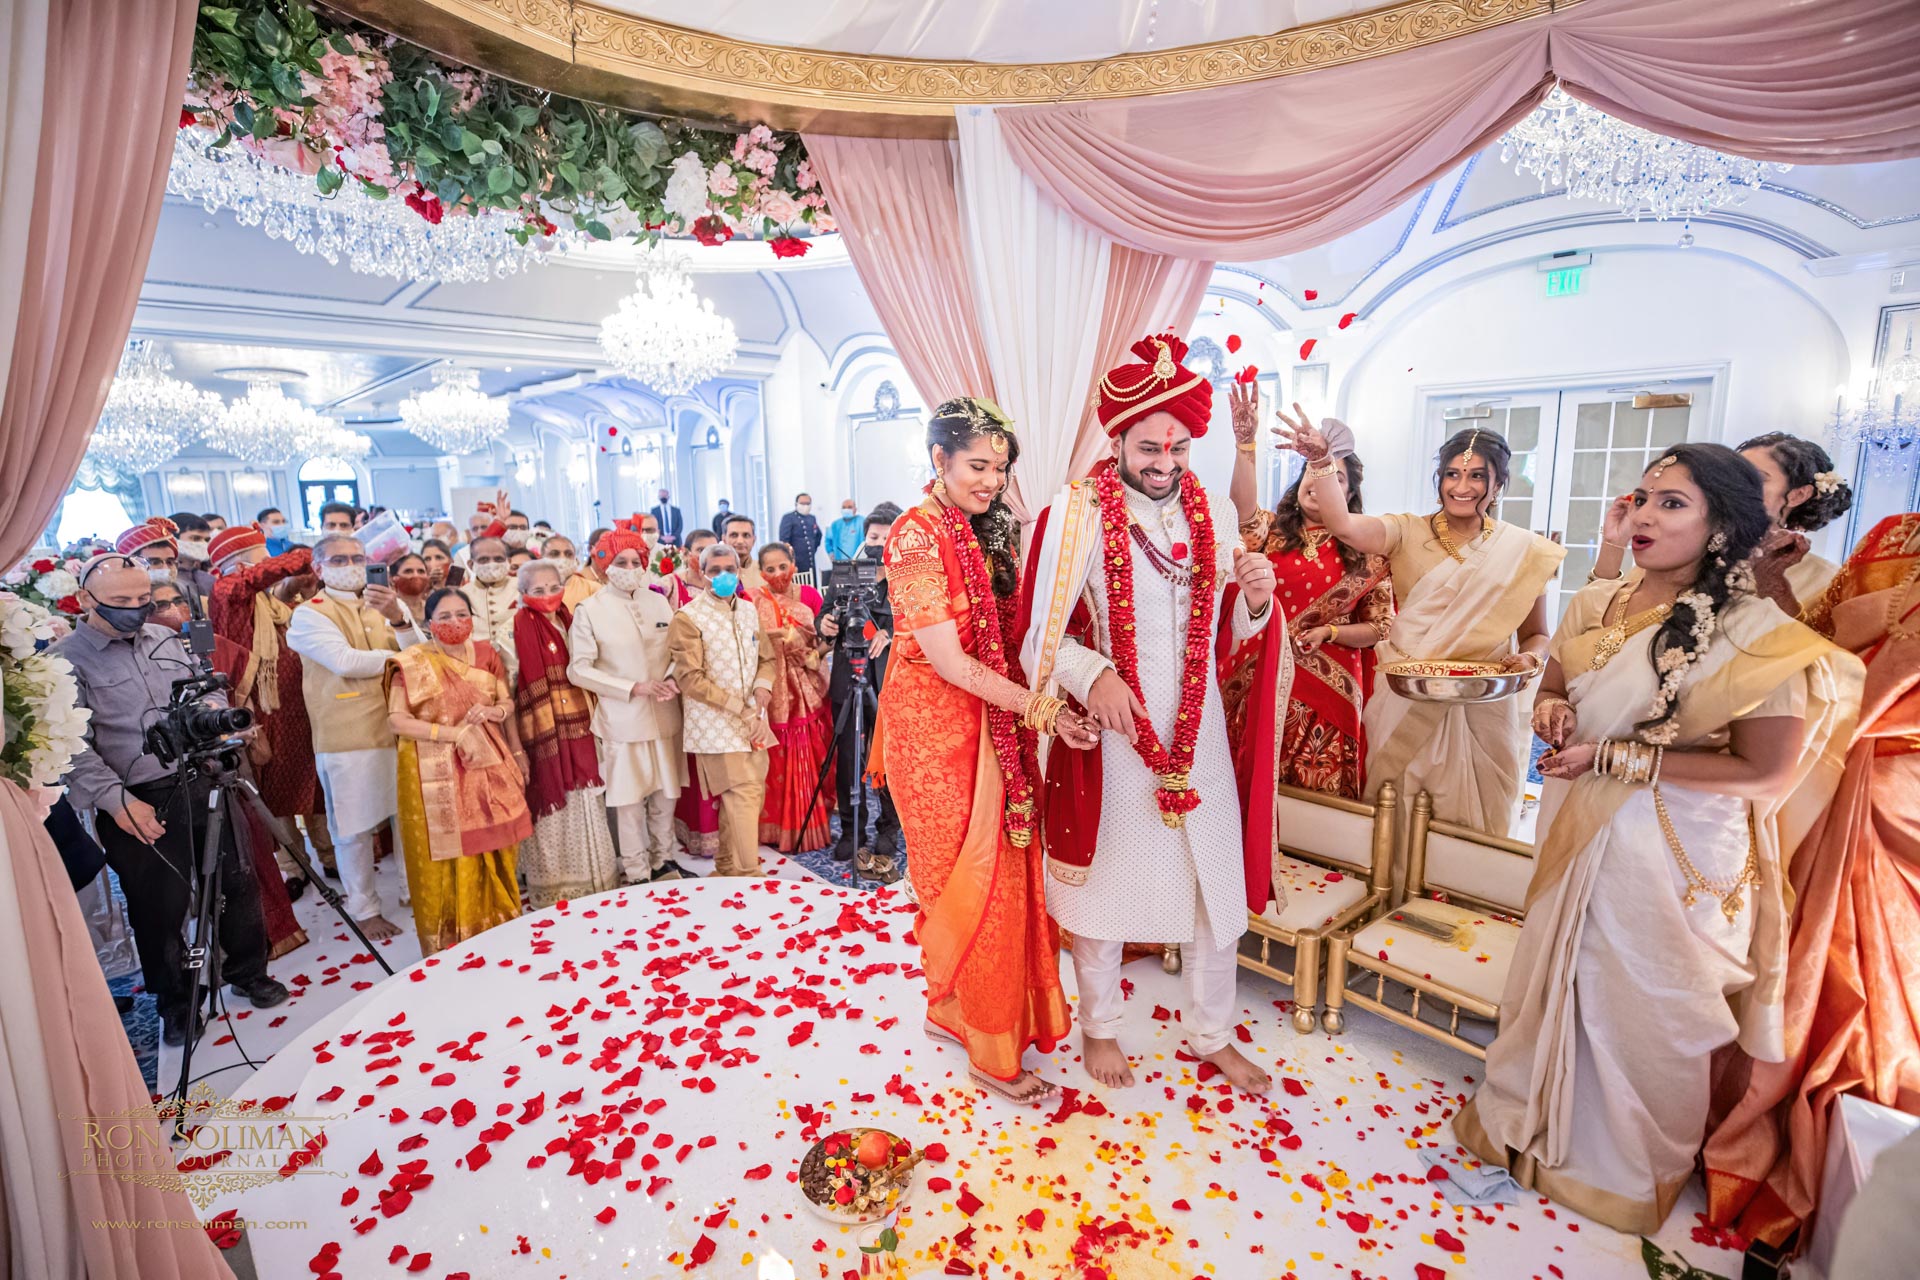 Sailusha + Ravi | The Meadow Wood Manor Indian Wedding